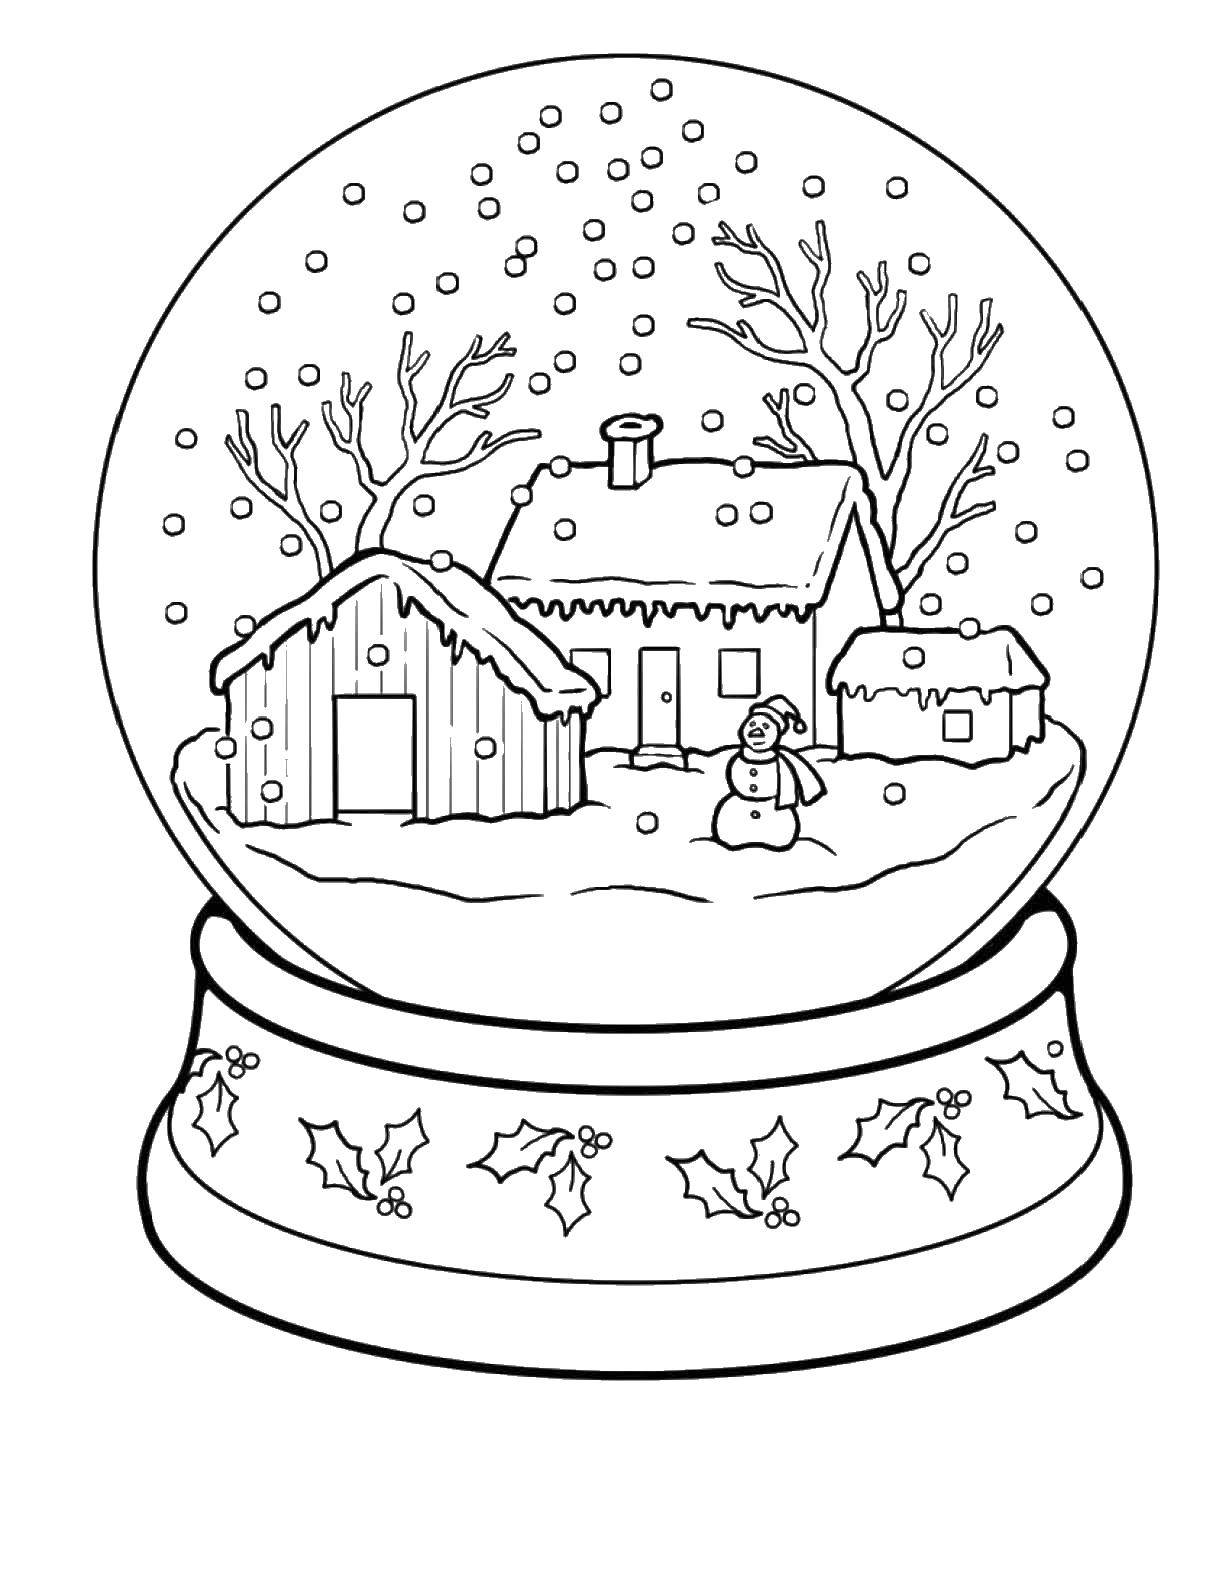 Название: Раскраска Шарик с домиками внутри. Категория: зима. Теги: дом, зима, шар.